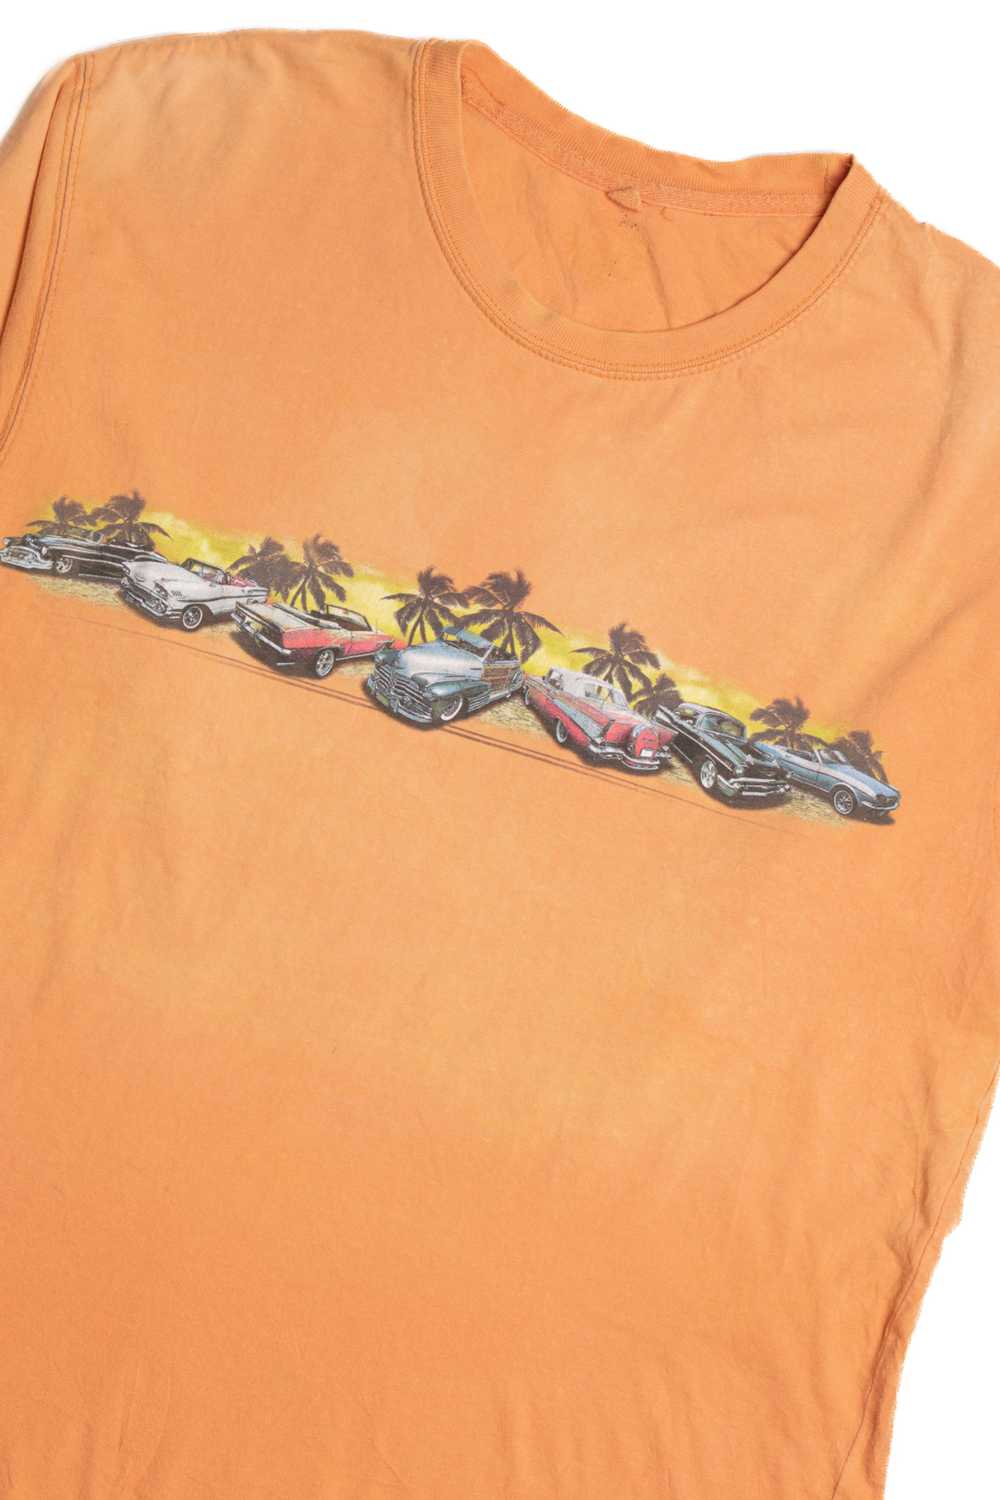 Classic Cars T-Shirt 8575 - image 2